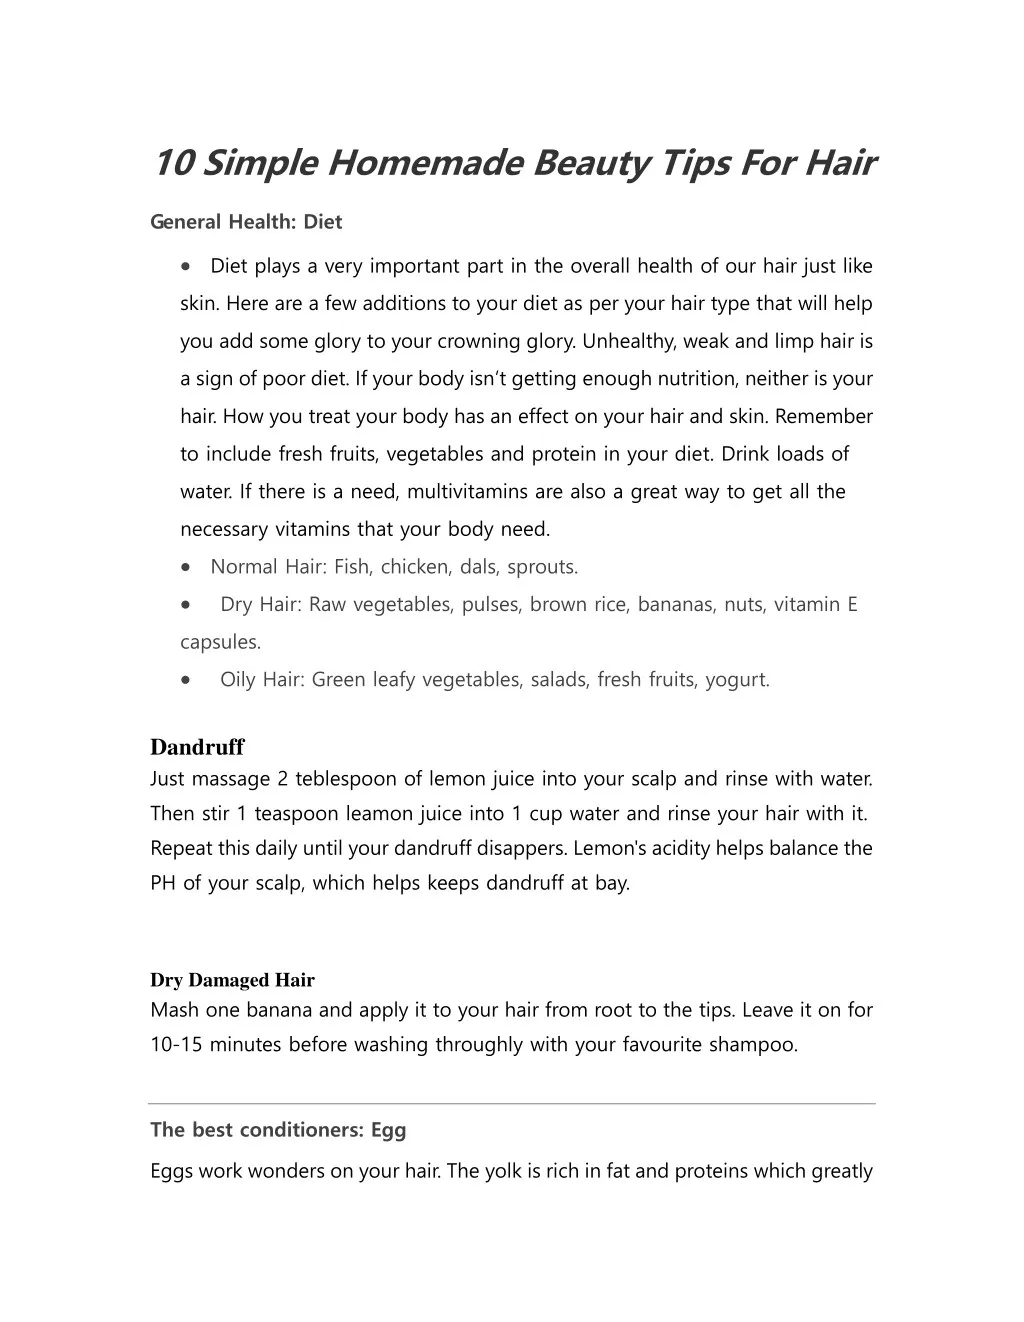 10 simple homemade beauty tips for hair